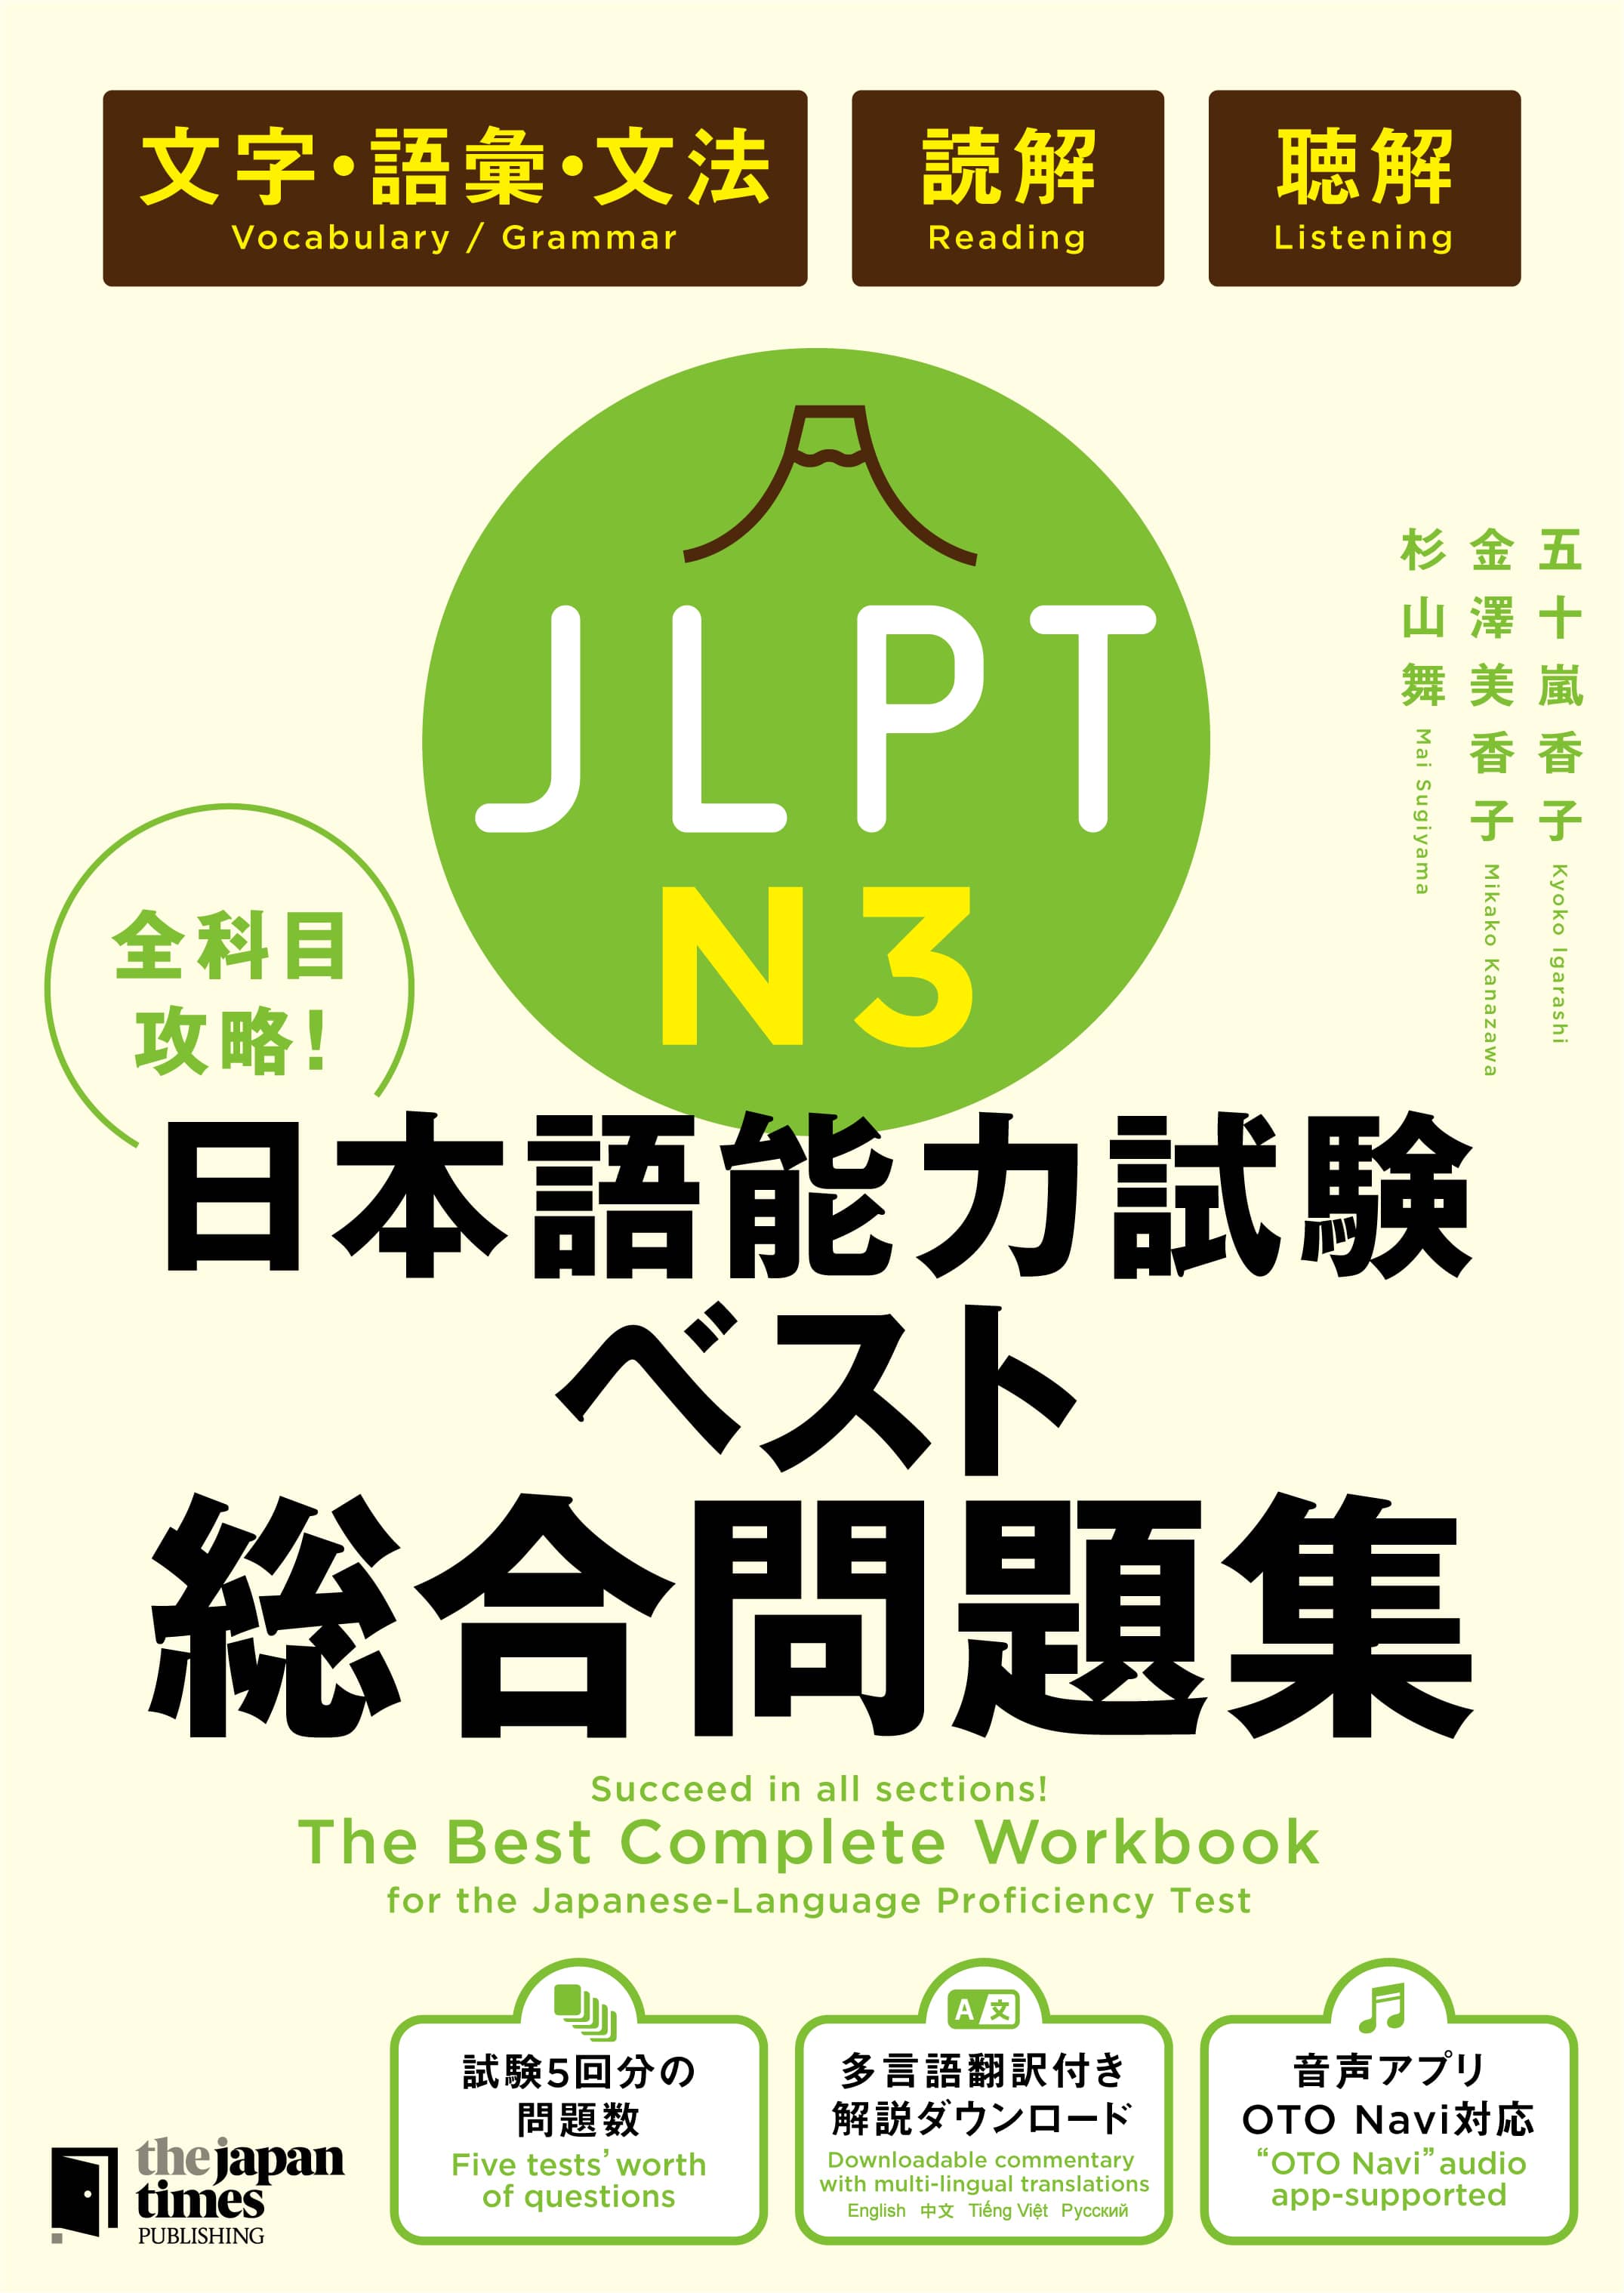 Learn JLPT N3 Vocabulary: 資格 (shikaku) –